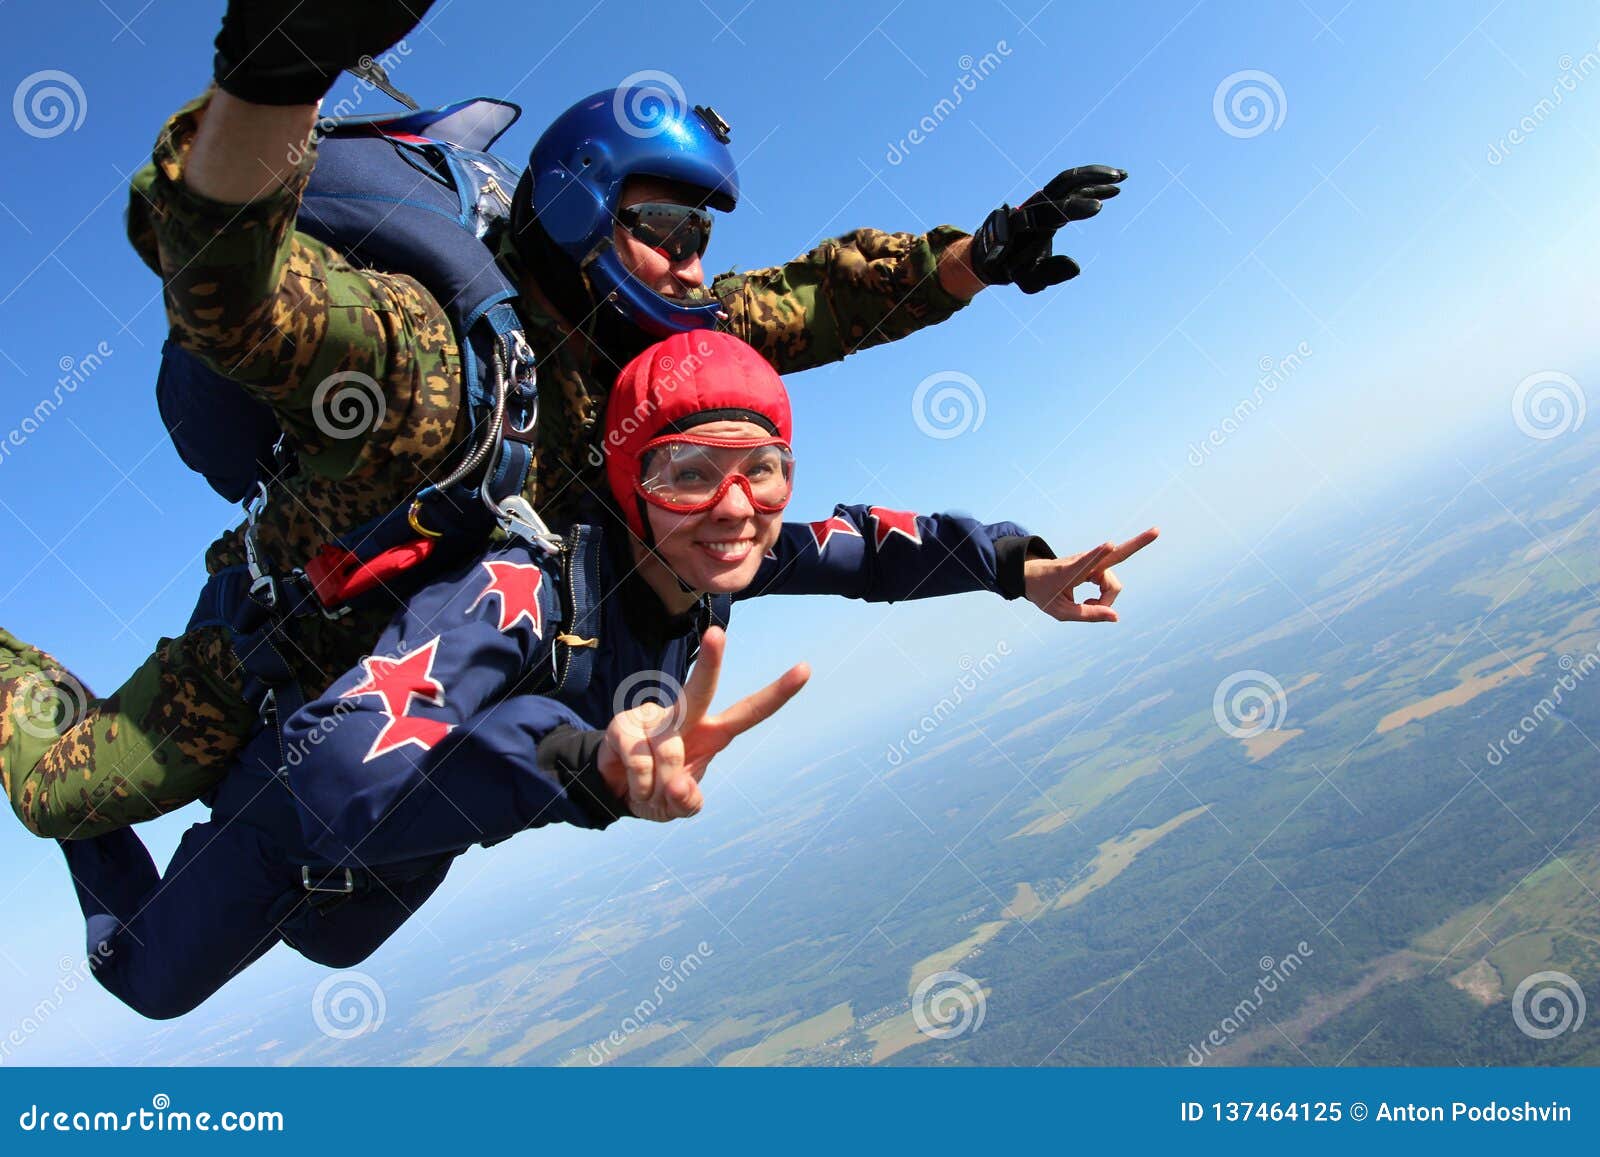 skydiving tandem is falling in the blue sky.